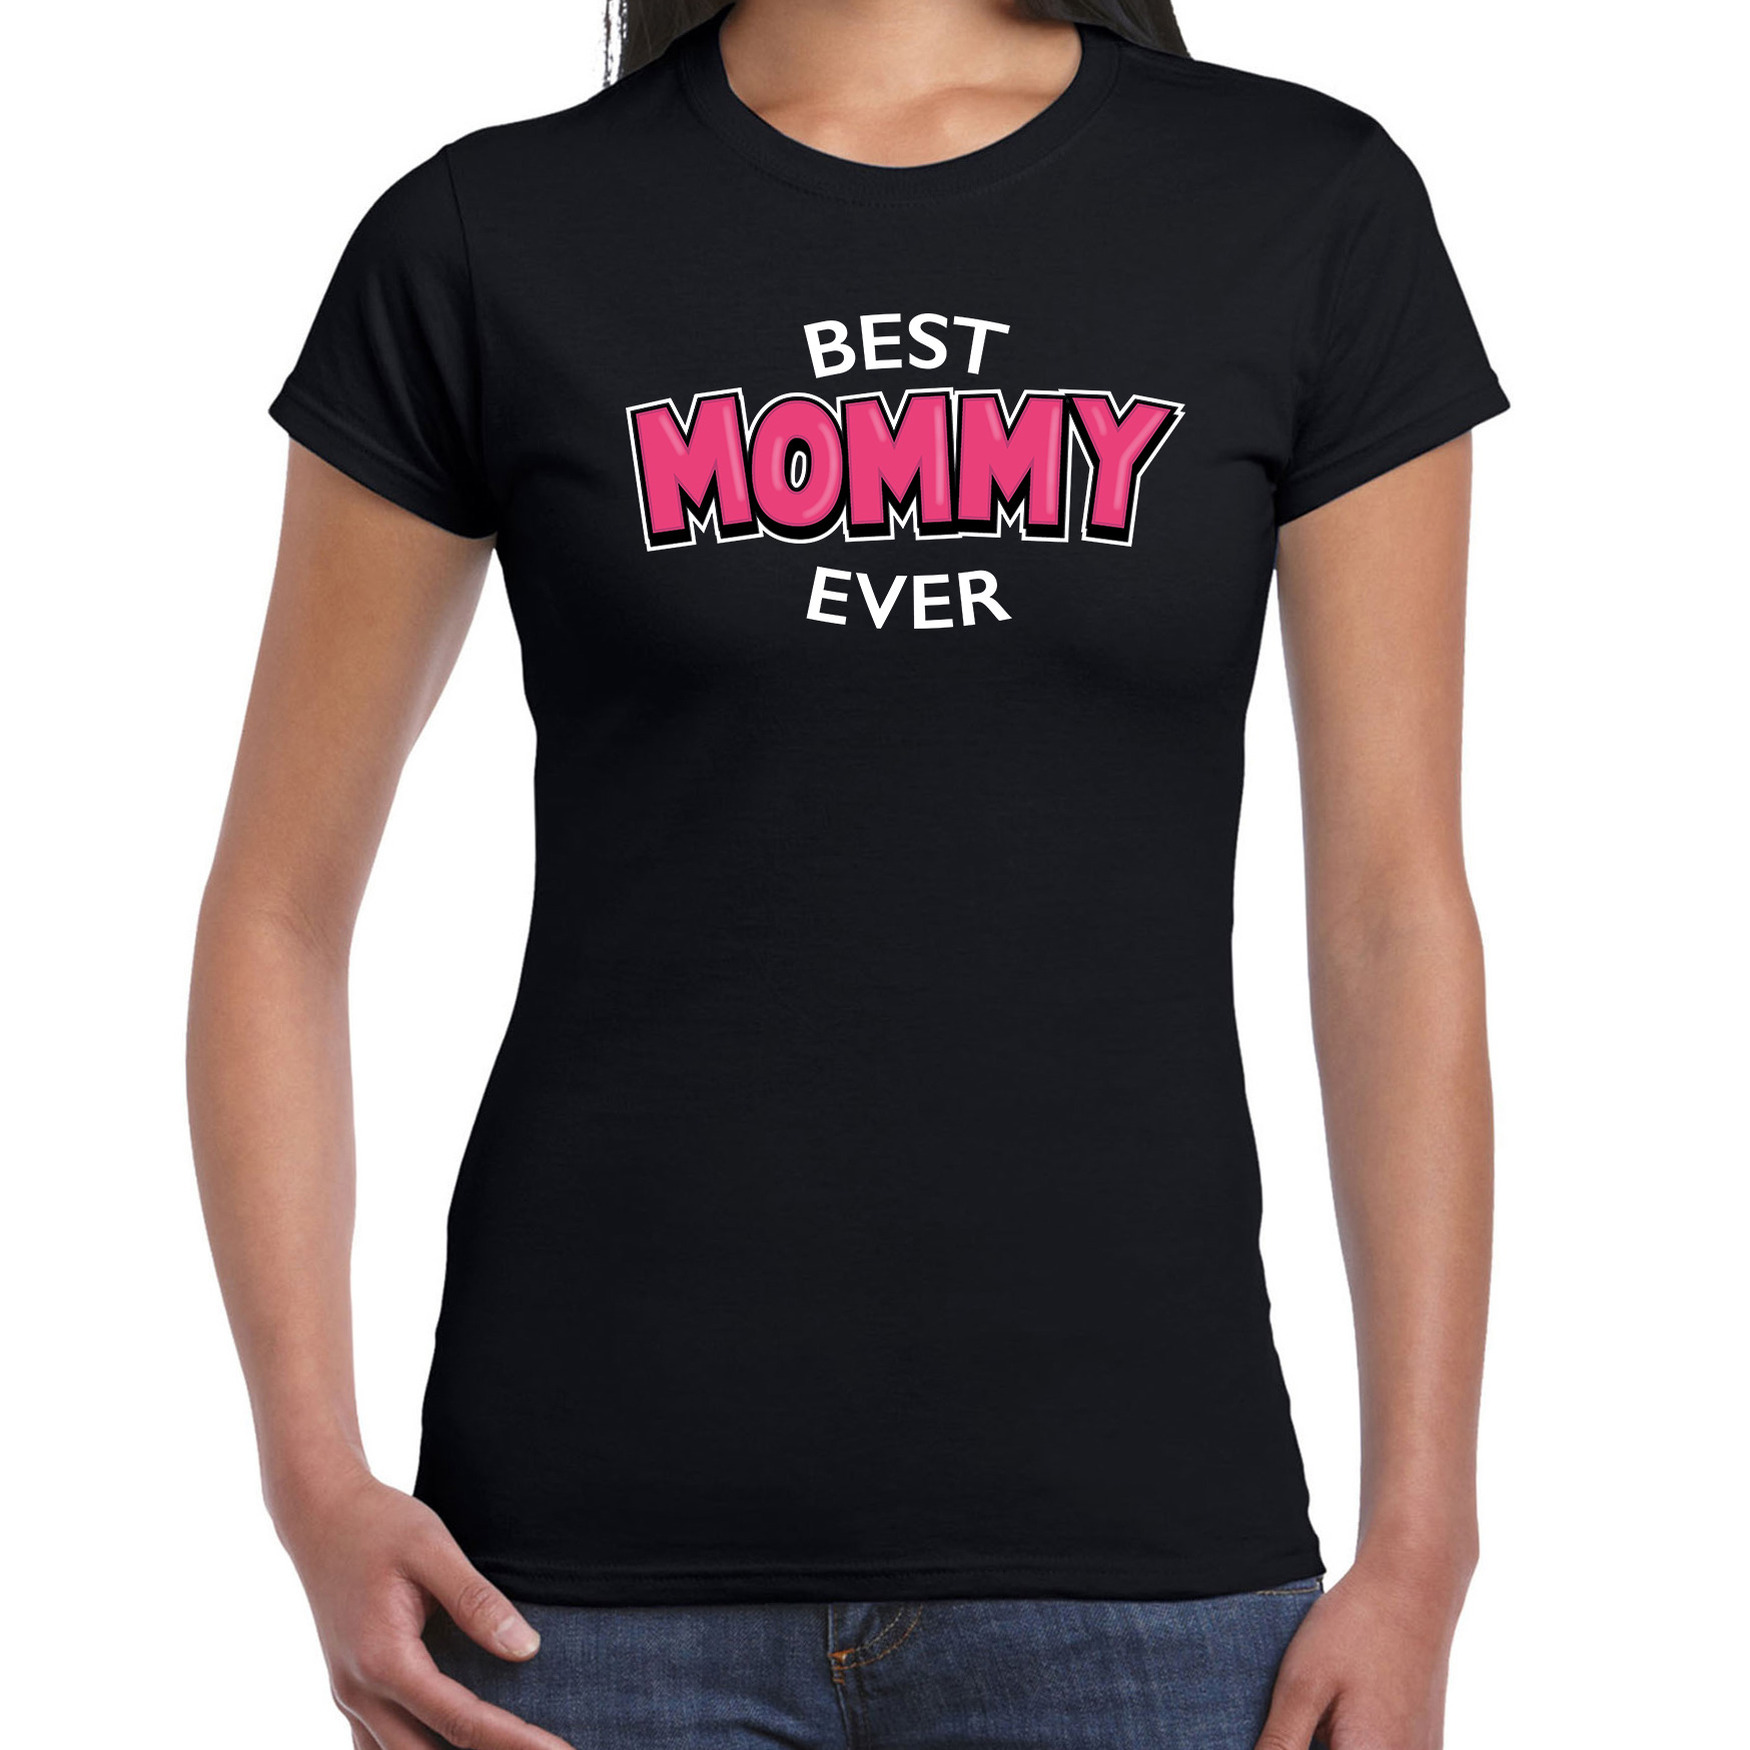 Best mommy ever kado shirt-kleding voor moederdag-verjaardag zwart dames